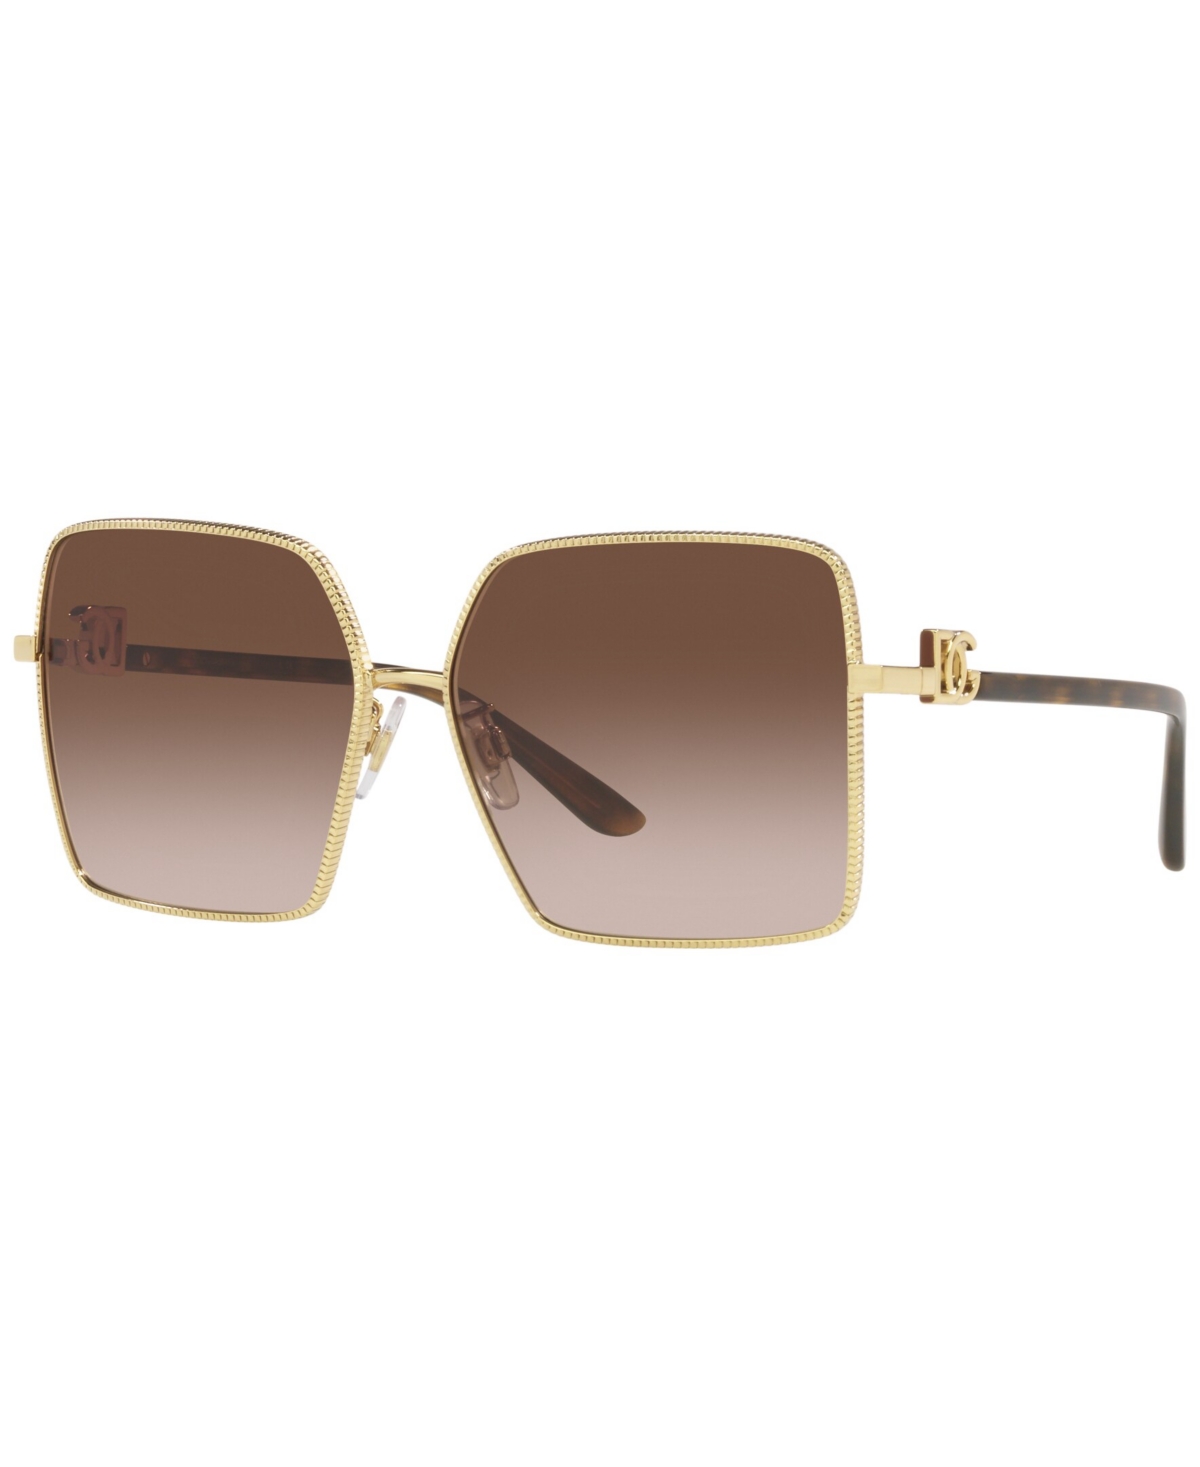 Dolce&Gabbana Women's Sunglasses, DG2279 - Gold-Tone